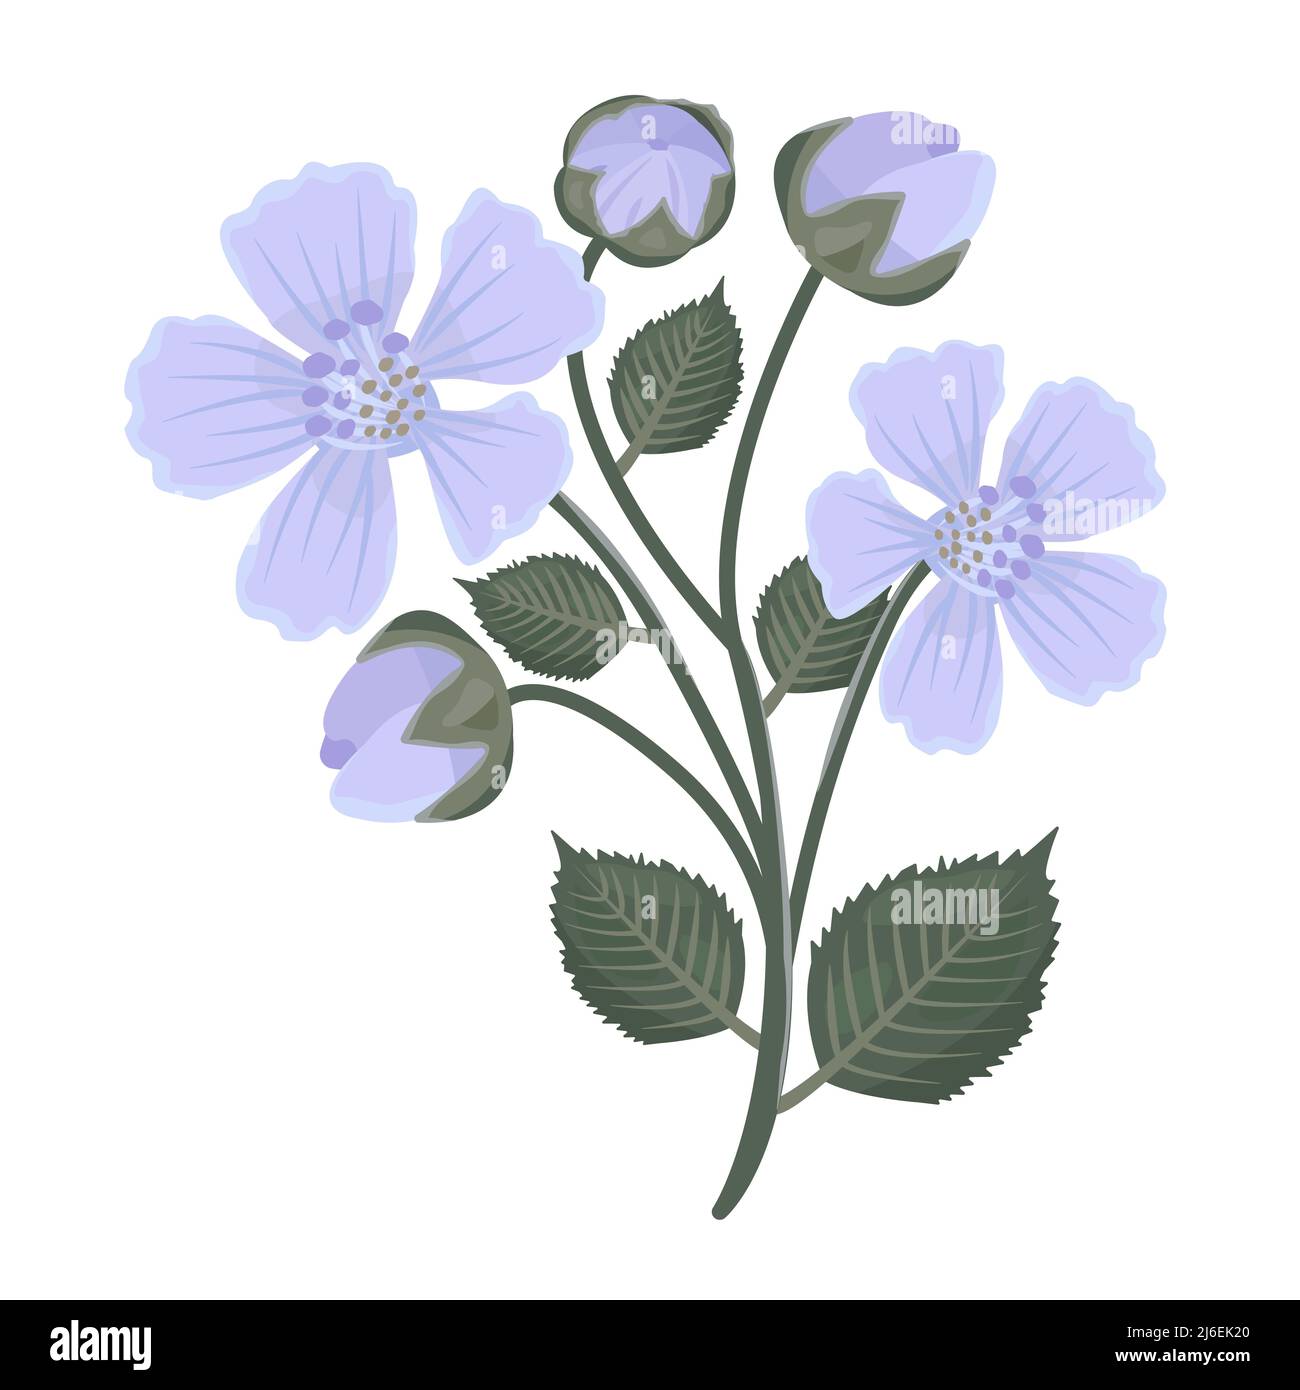 Blackberry flowers with leaves, illustration Stock Vector